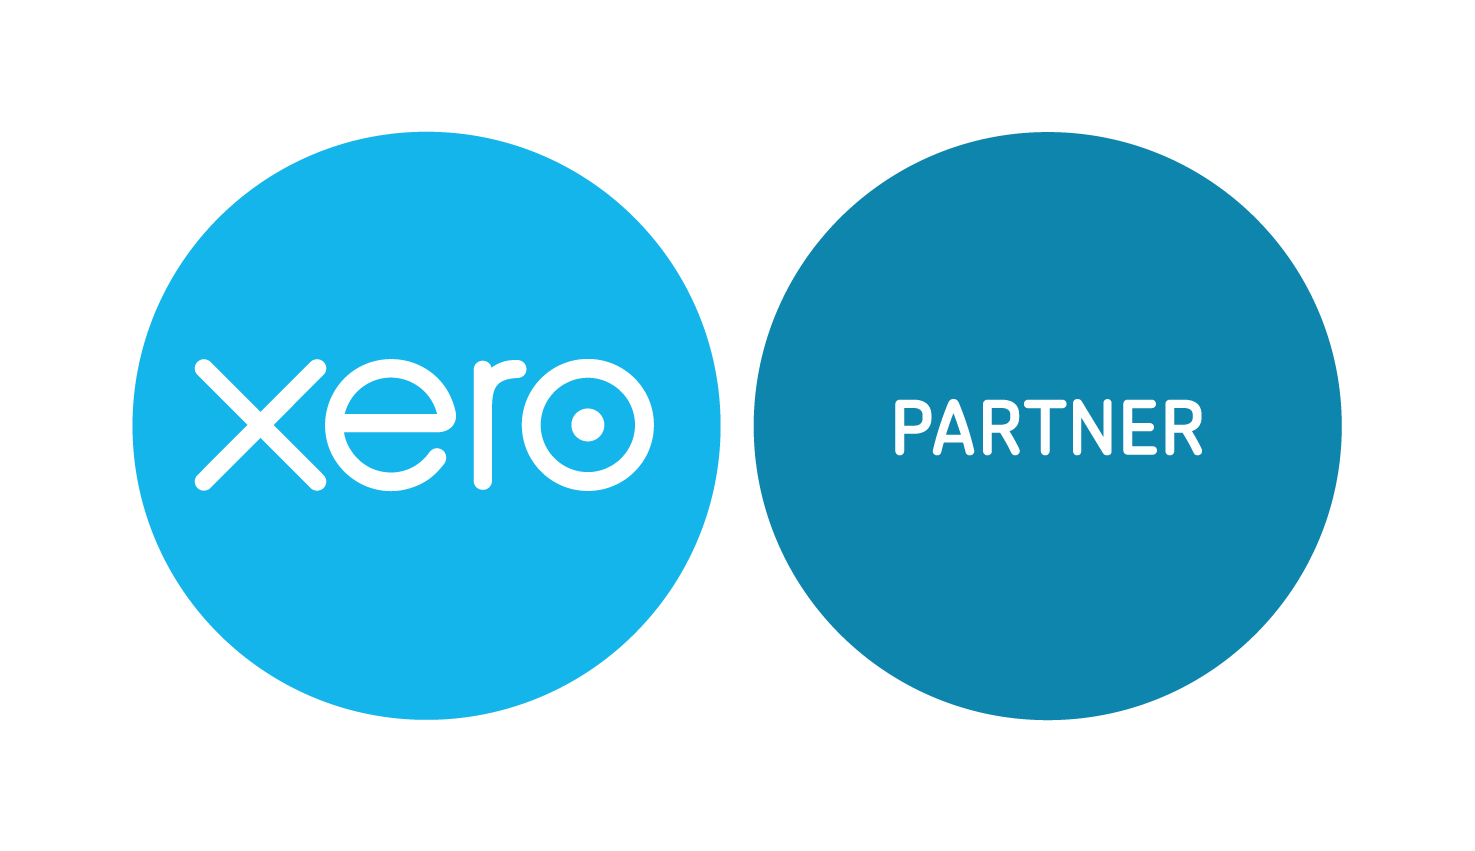 Xero partner badges.